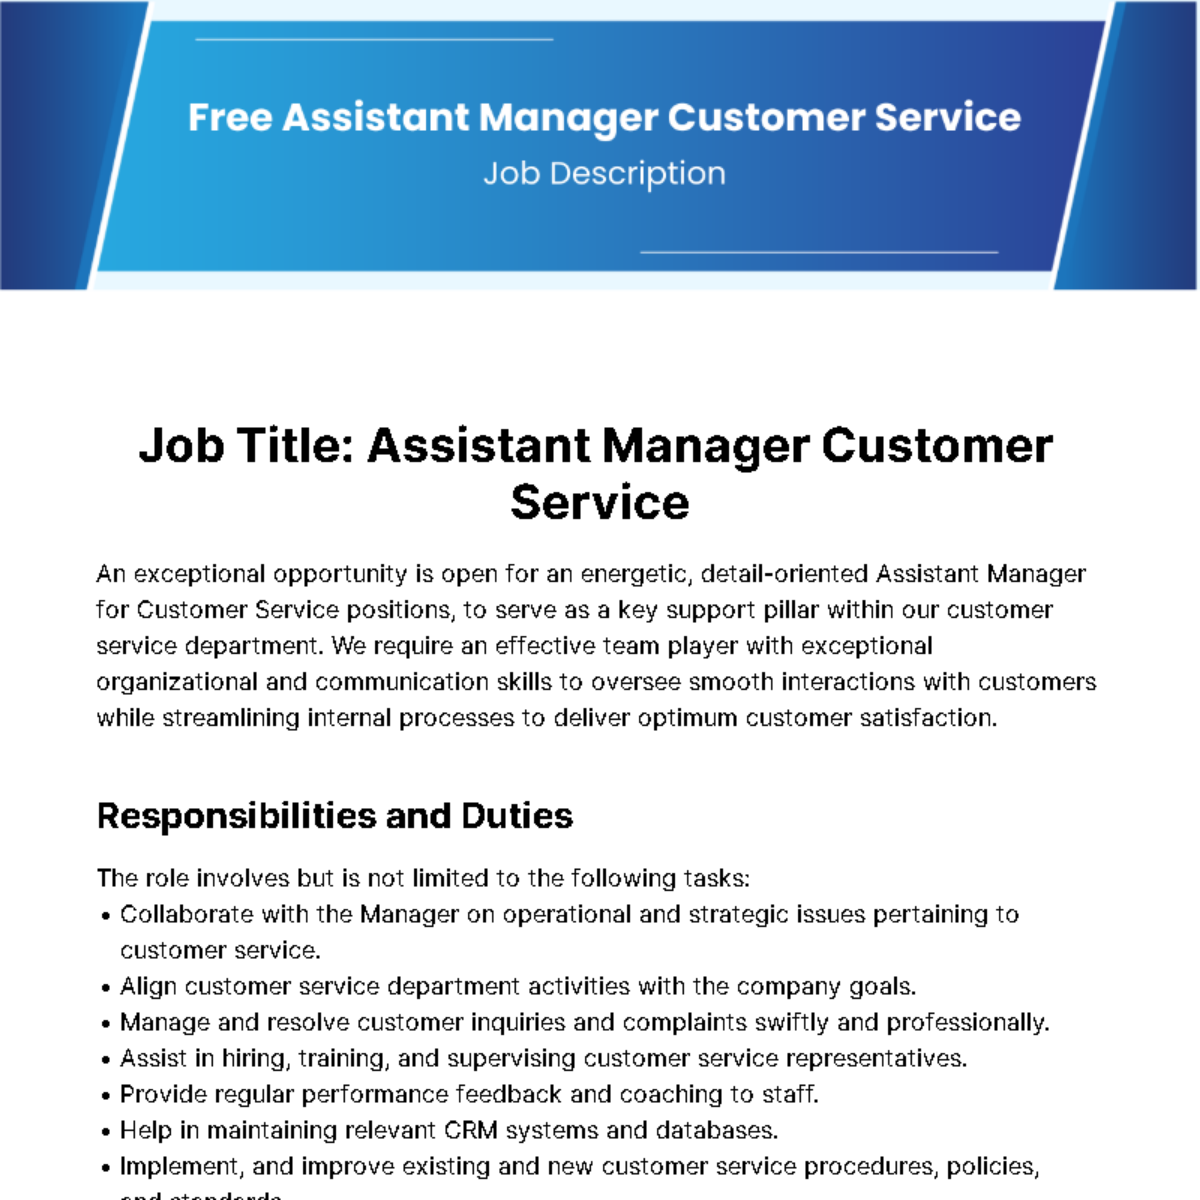 Free Assistant Manager Customer Service Job Description Template